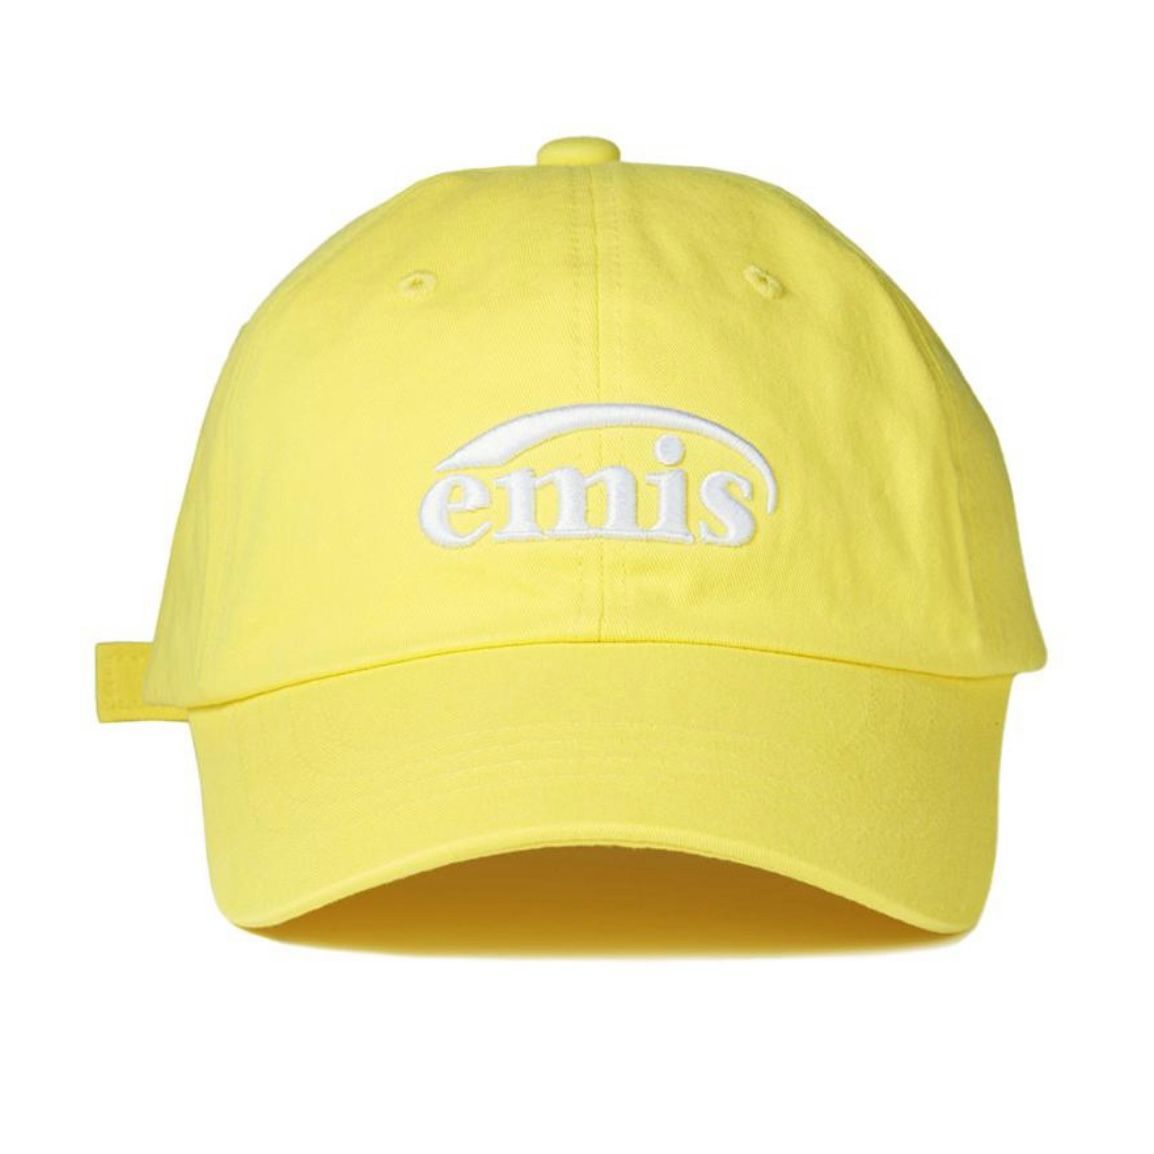 【emis エミス 】 NEW LOGO BALL CAP 韓国 キャップ 帽子 韓国ブランド K-POPアイドル EMIS イミス 正規品